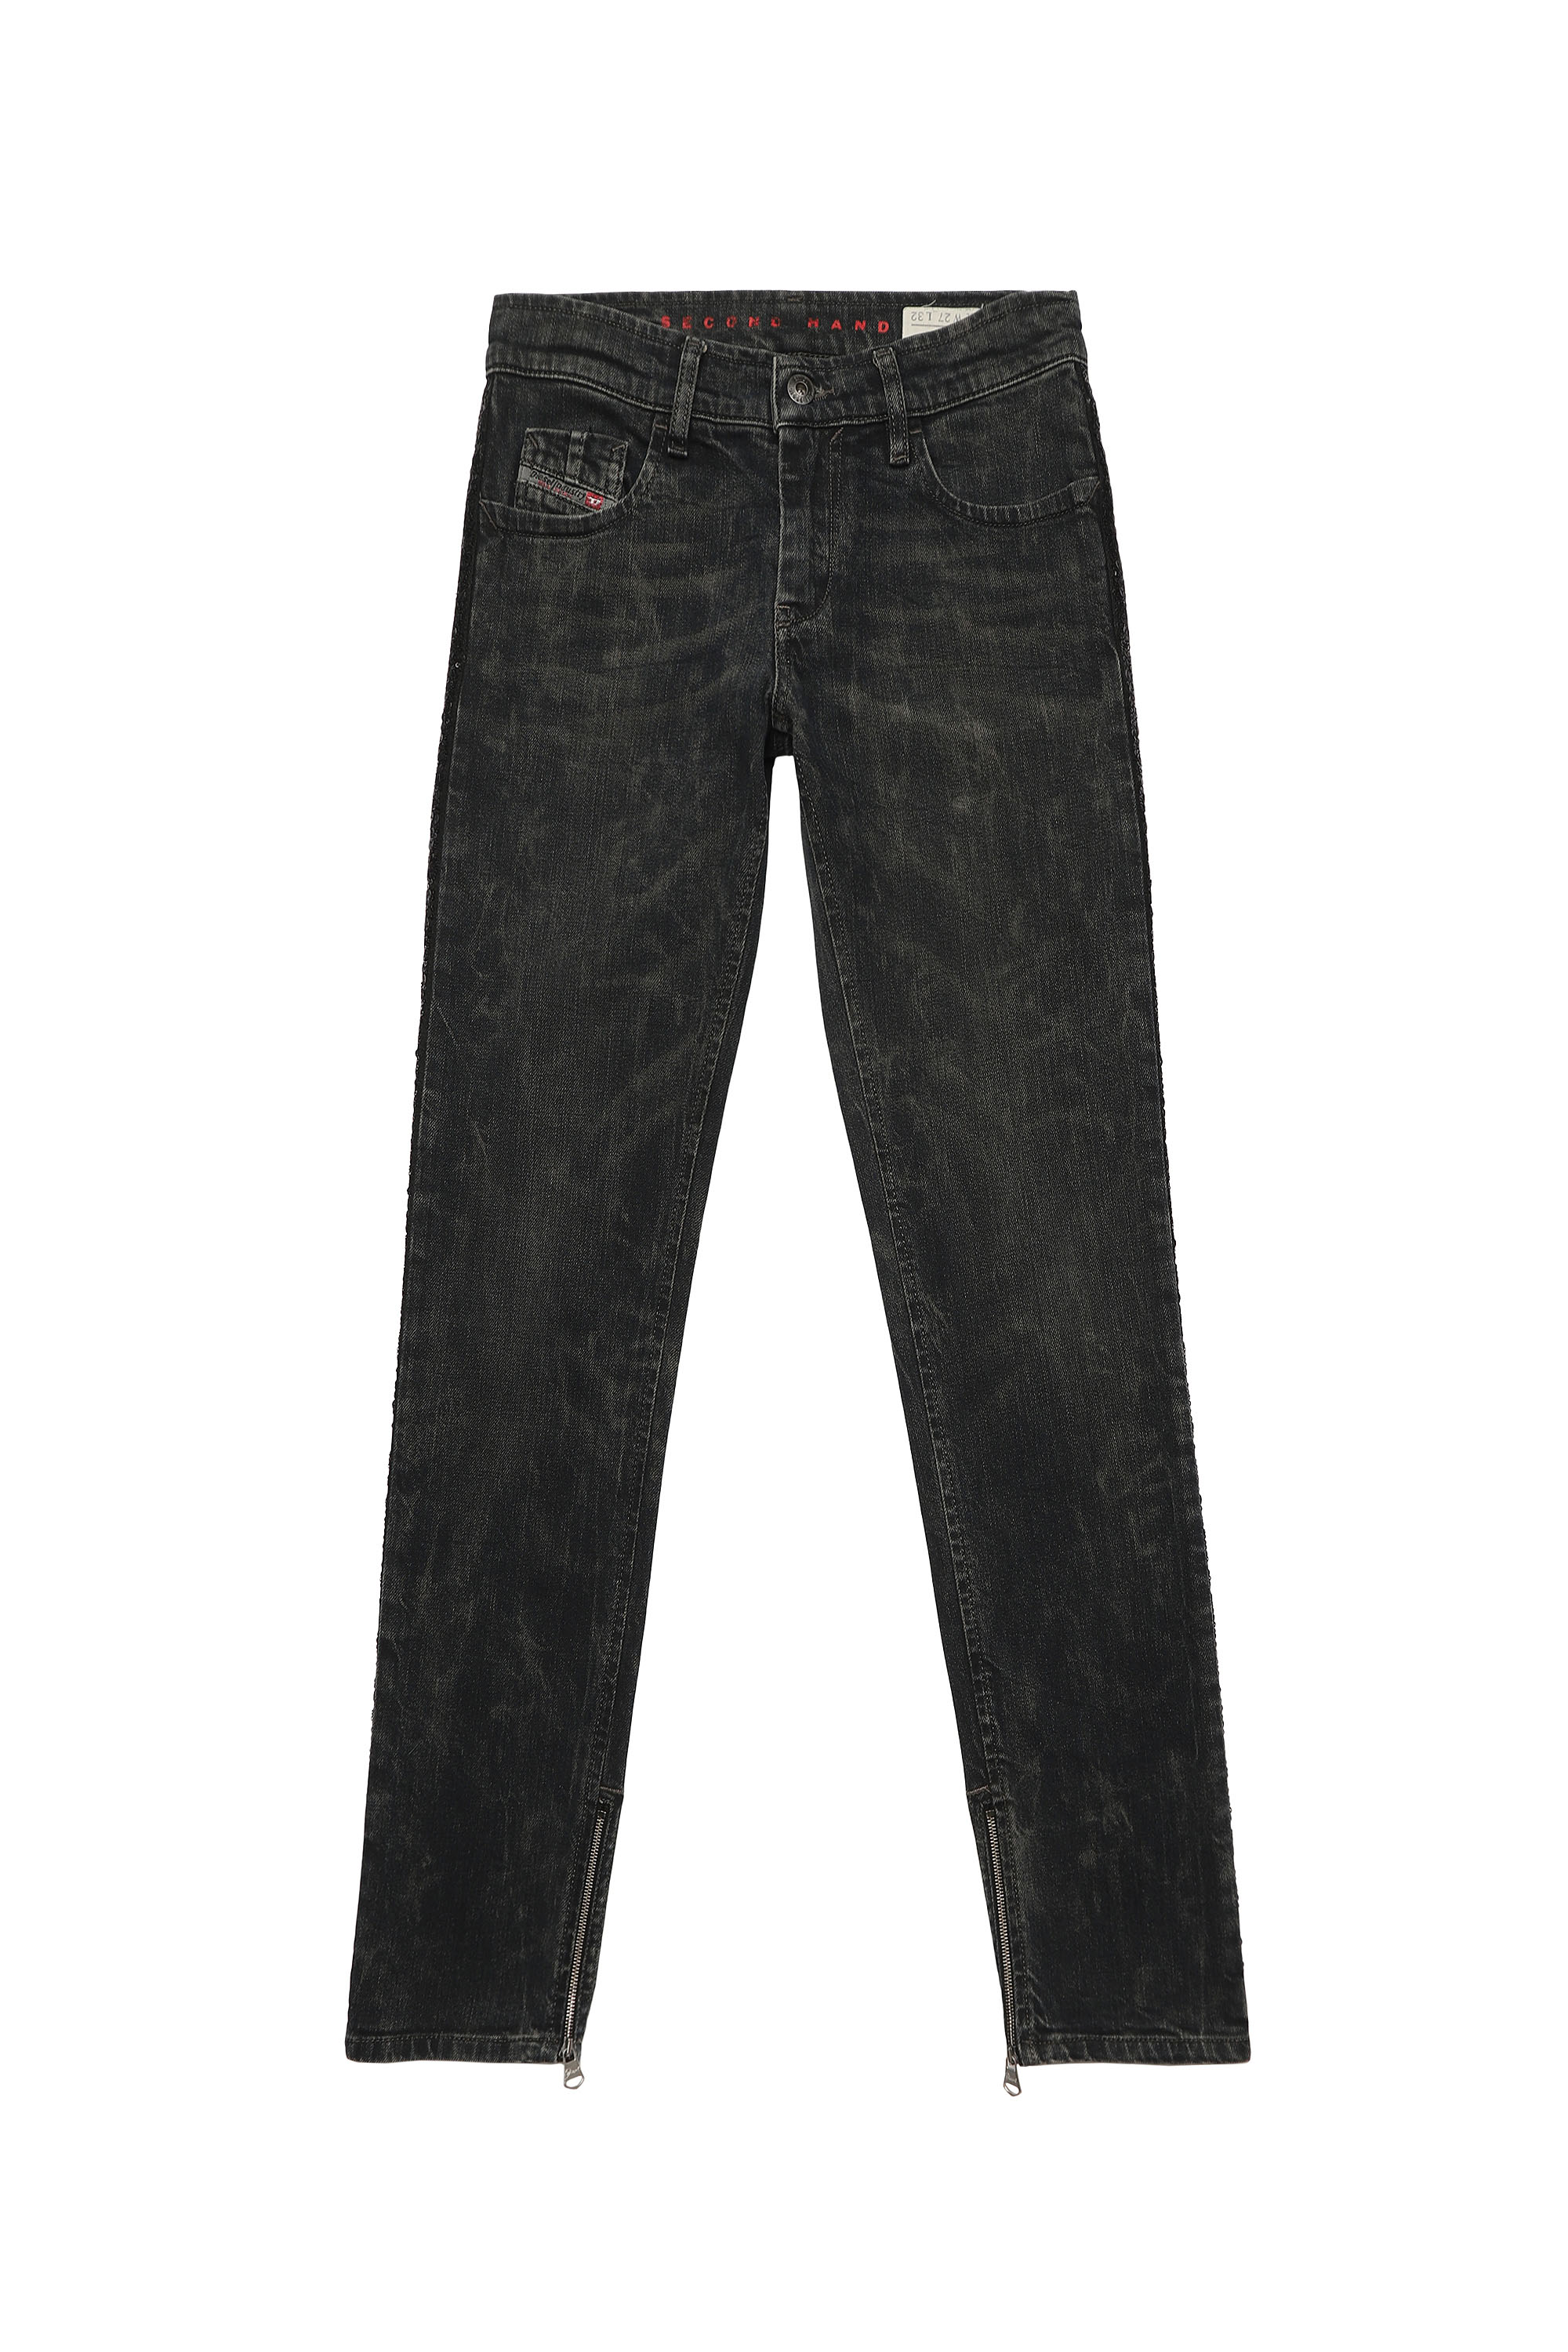 ZIVY, Black/Dark grey - Jeans